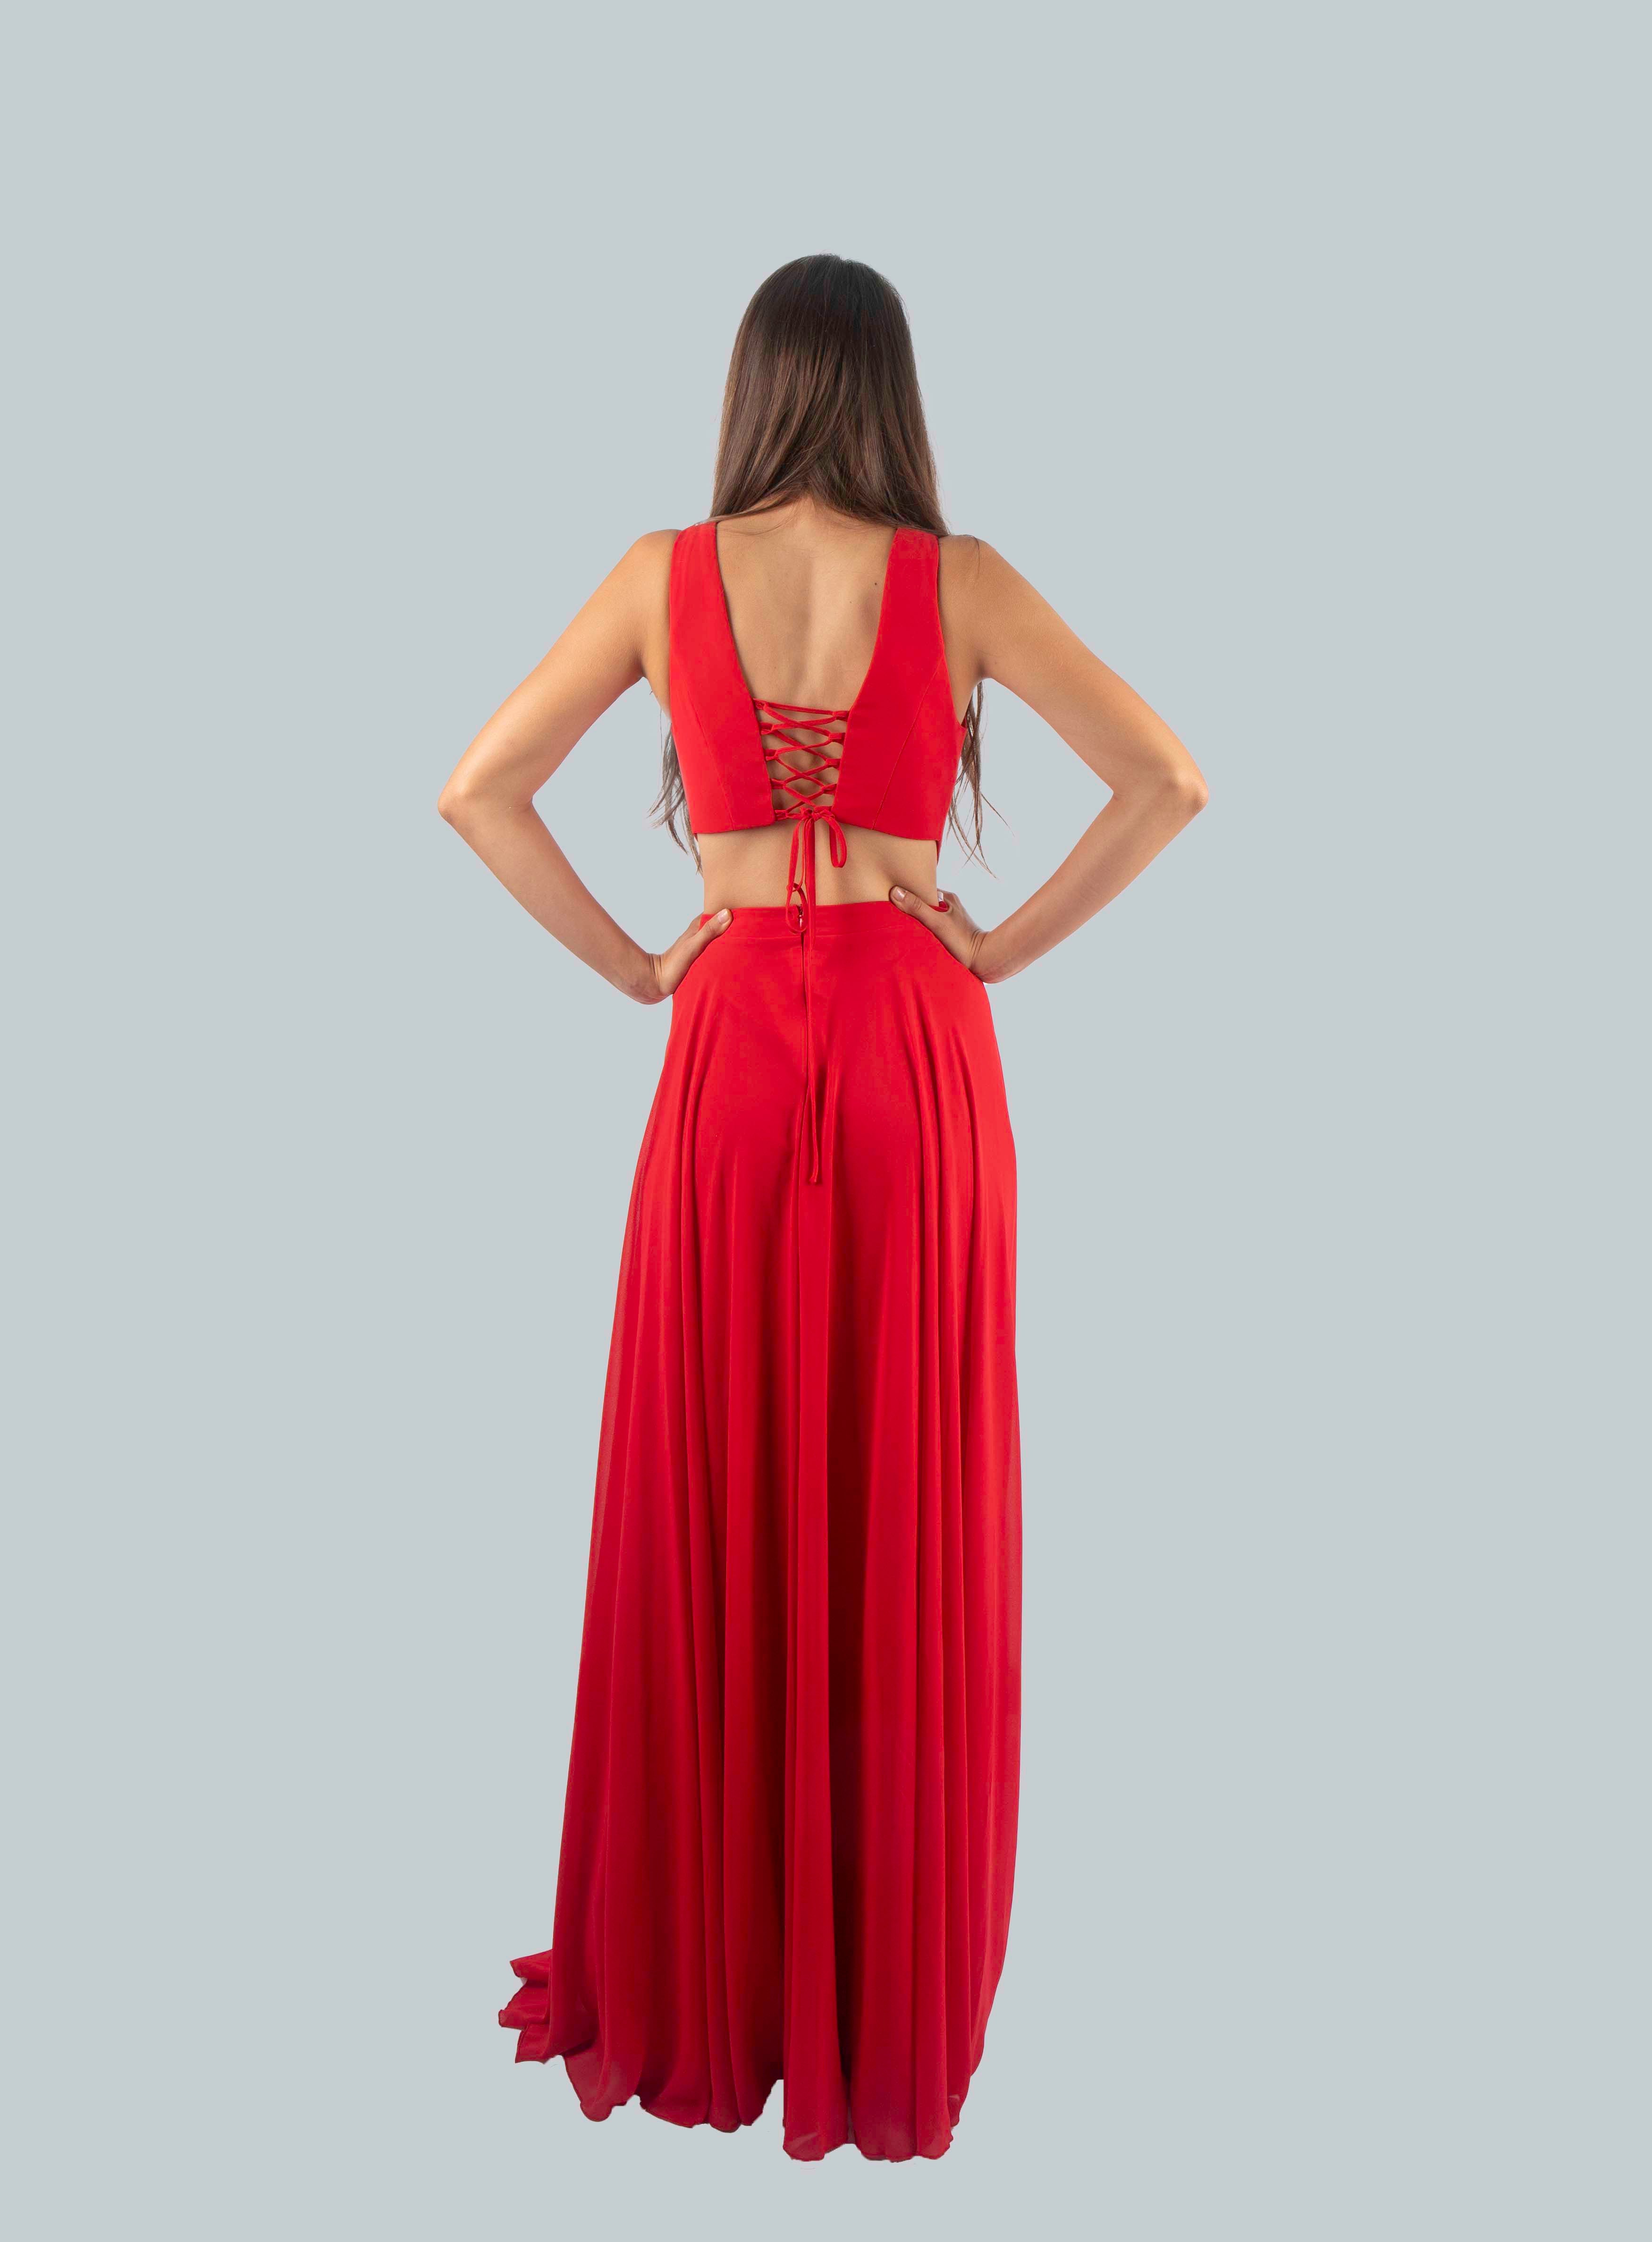 Red Evening Maxi Dress